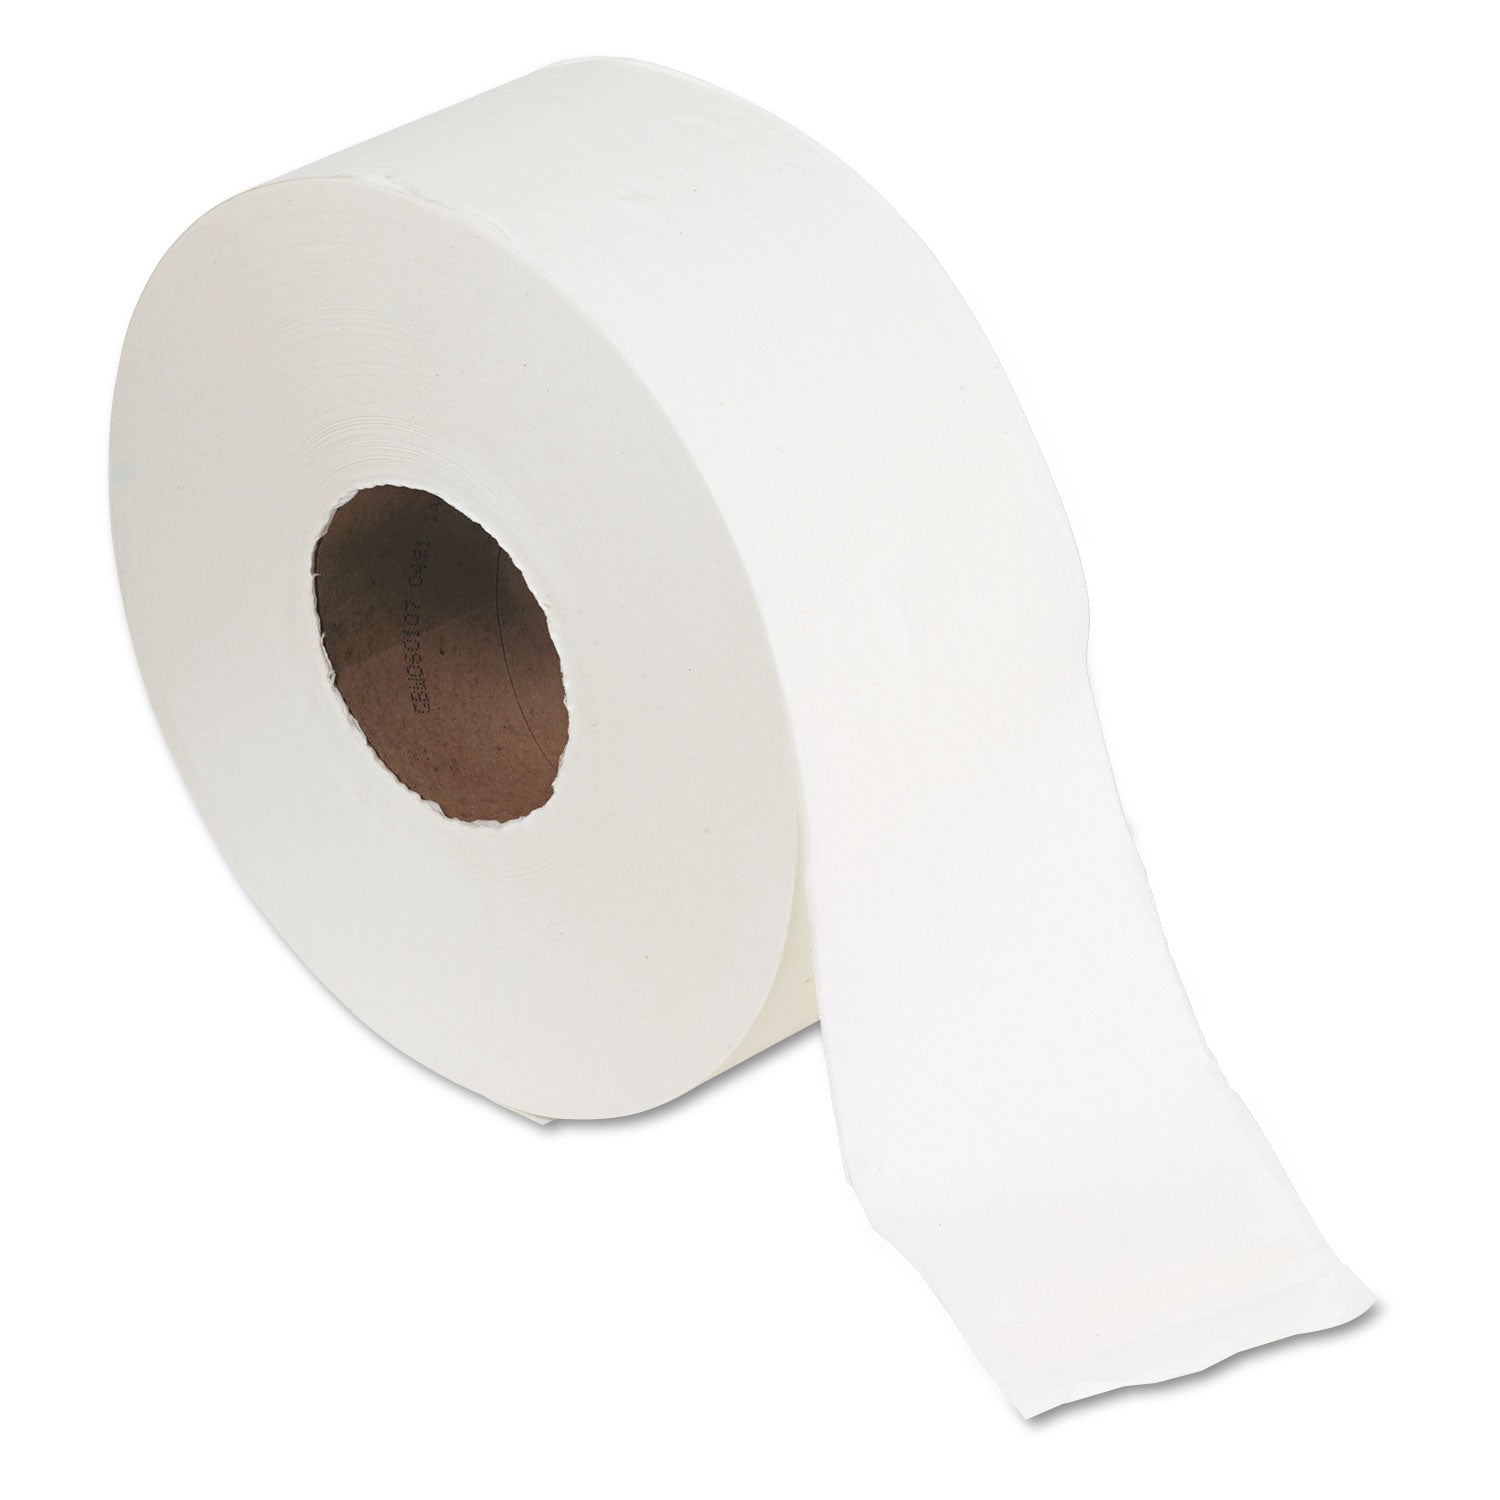 Jumbo Jr. Bath Tissue Roll, Septic Safe, 2-Ply, White, 3.5" x 1,000 ft, 8 Rolls/Carton - 